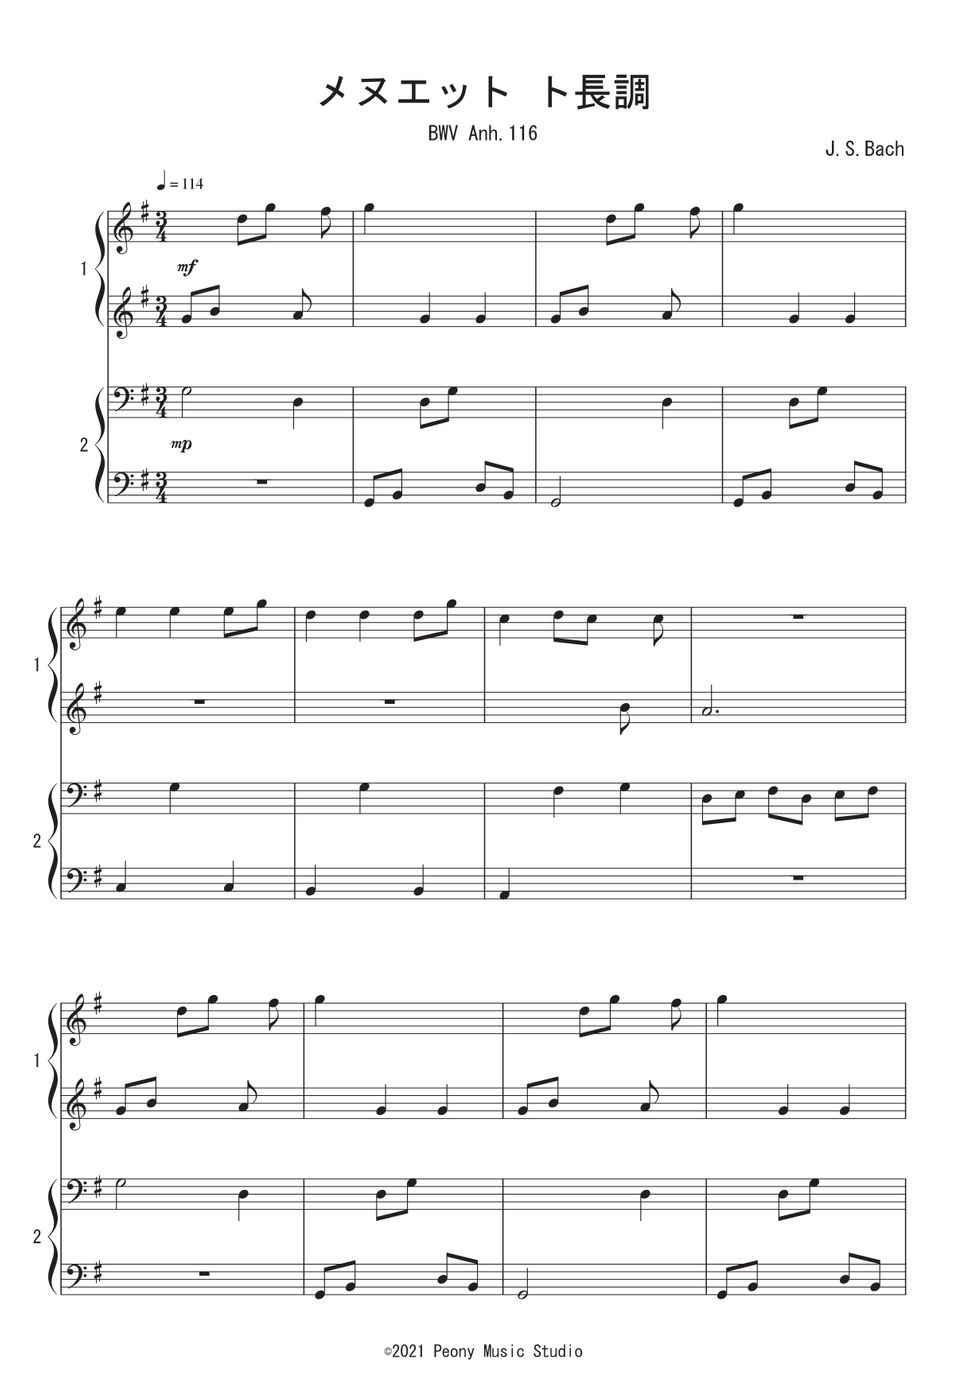 J.S.バッハ - メヌエット ト長調  BWV Anh.116 (ピアノ連弾) by Peony